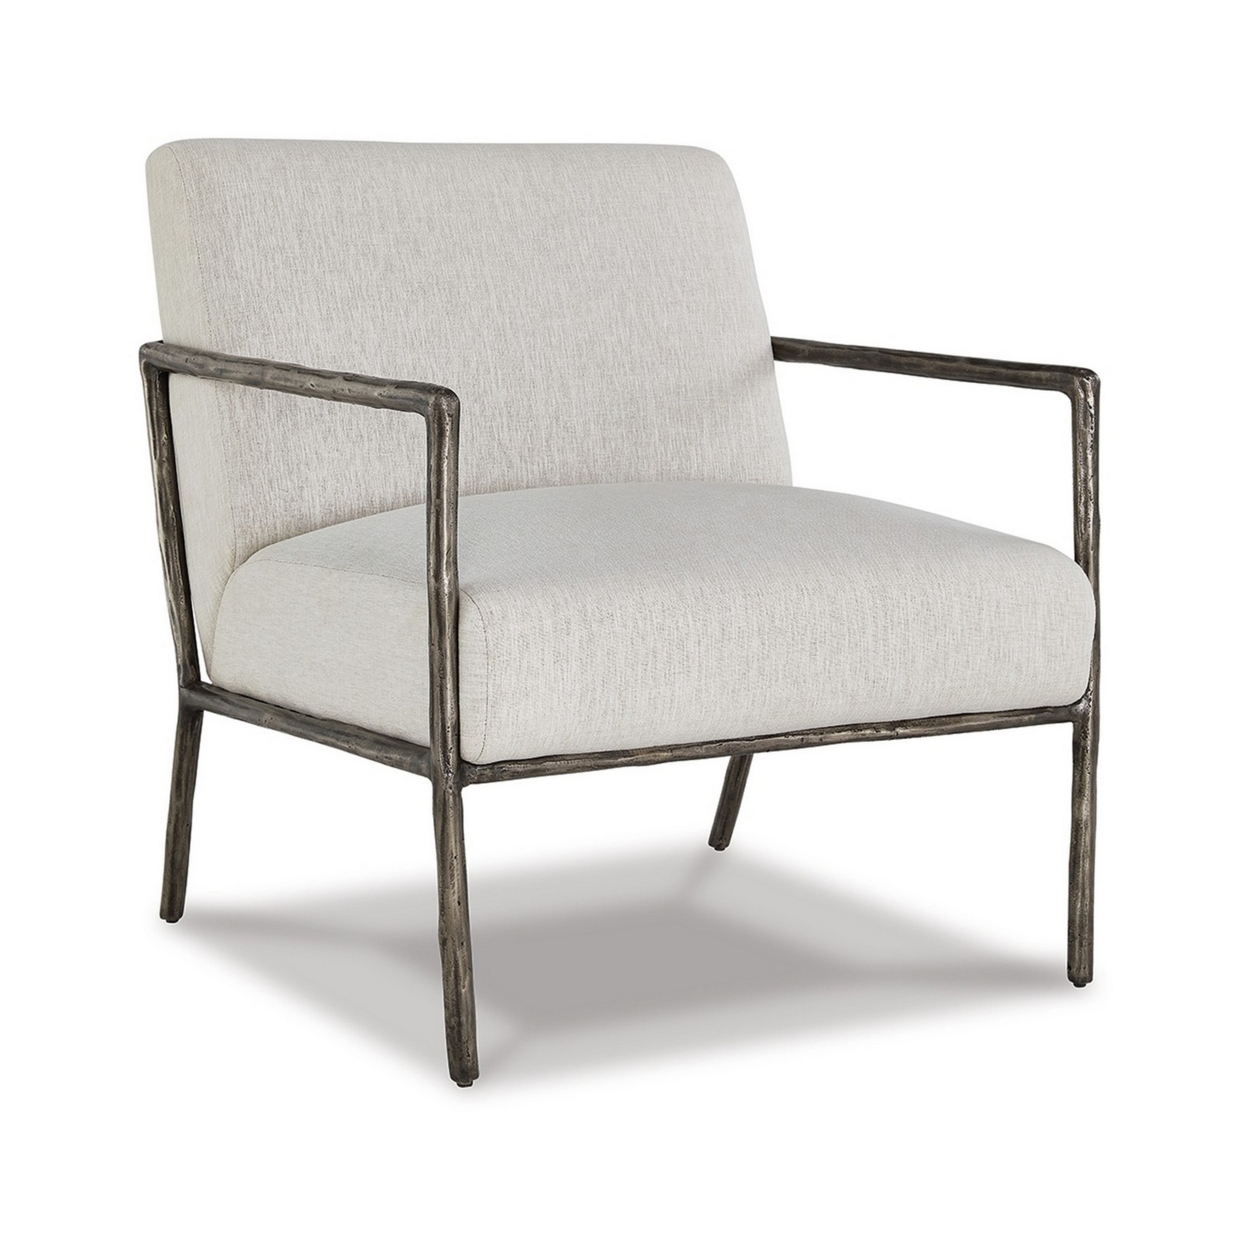 Tusk 30 Inch Accent Chair, Classic Pewter Aluminum Frame, Cream Upholstery- Saltoro Sherpi